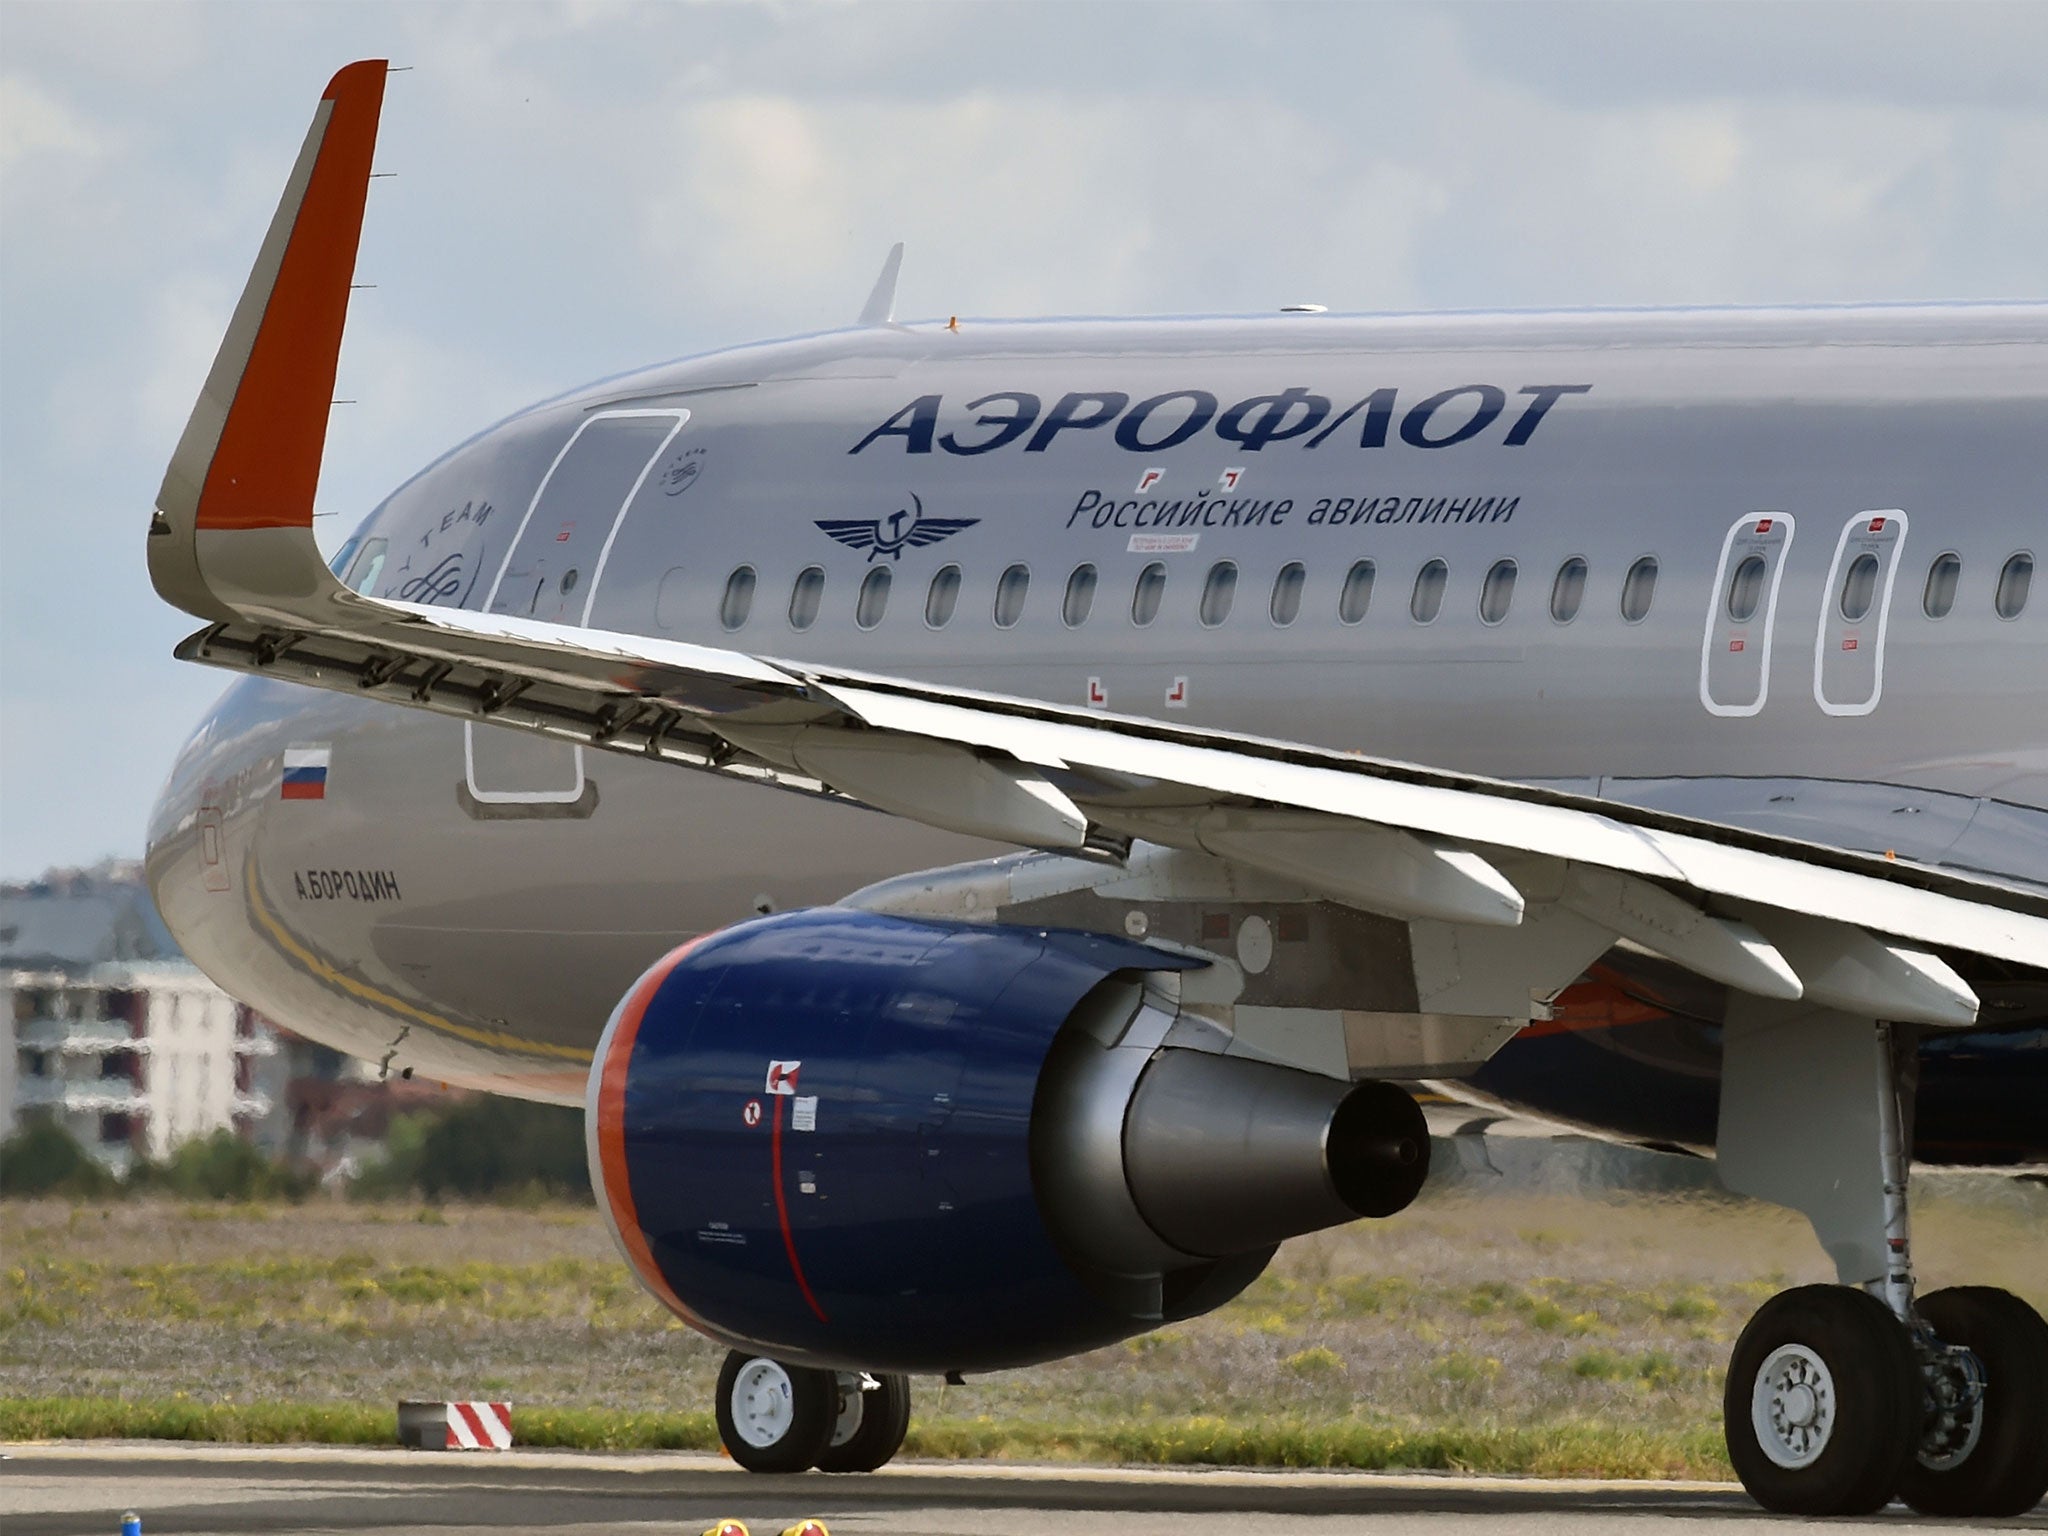 A plane belonging to the Russian company Aeroflot